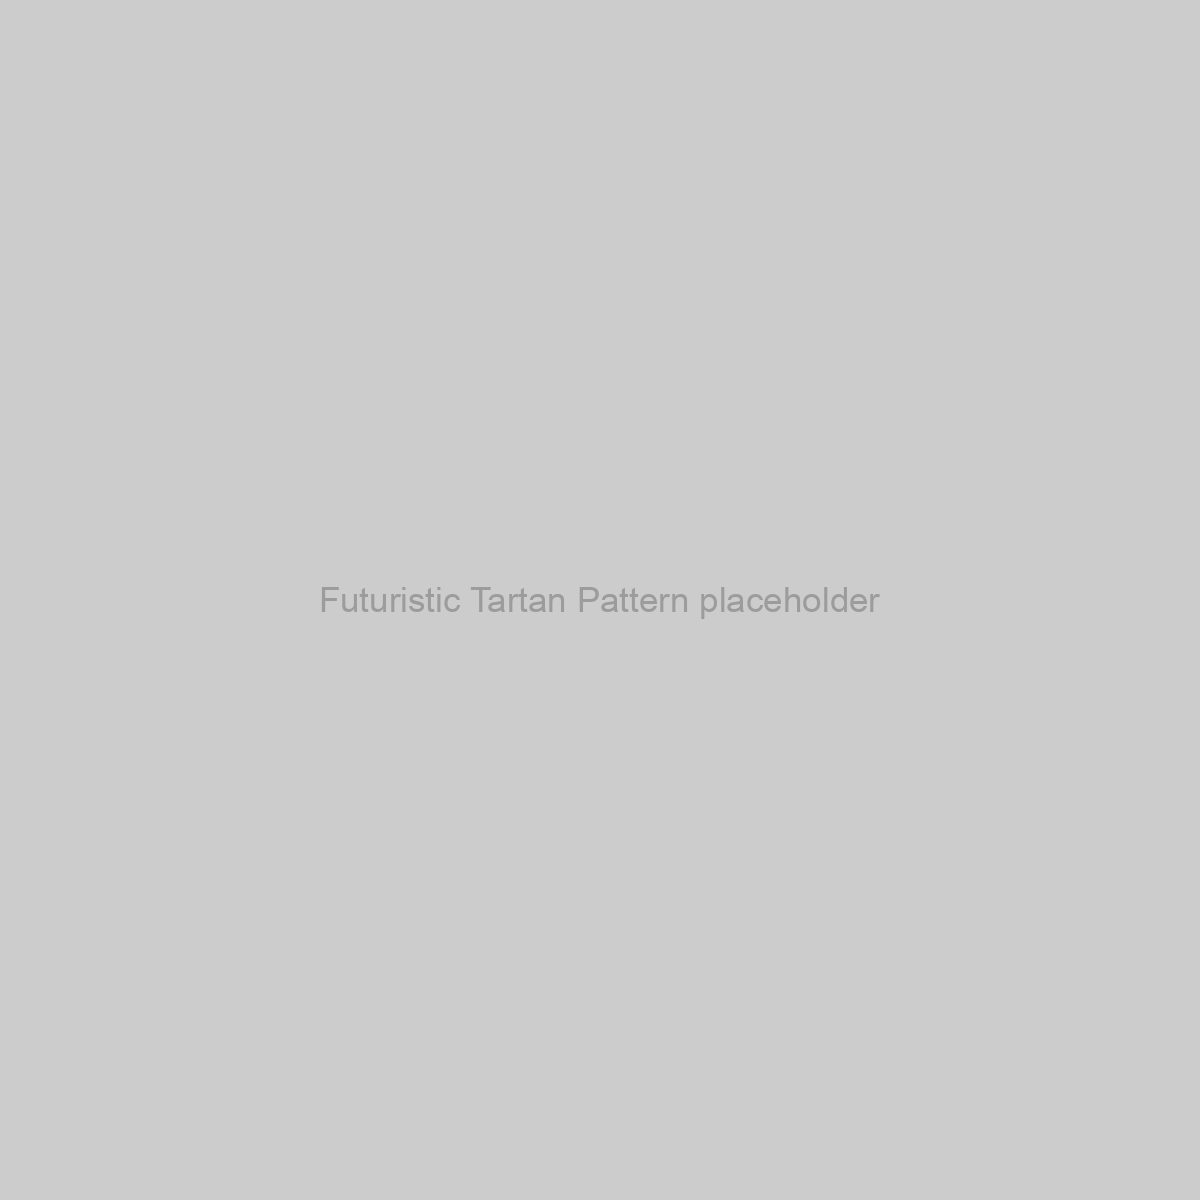 Futuristic Tartan Pattern Placeholder Image